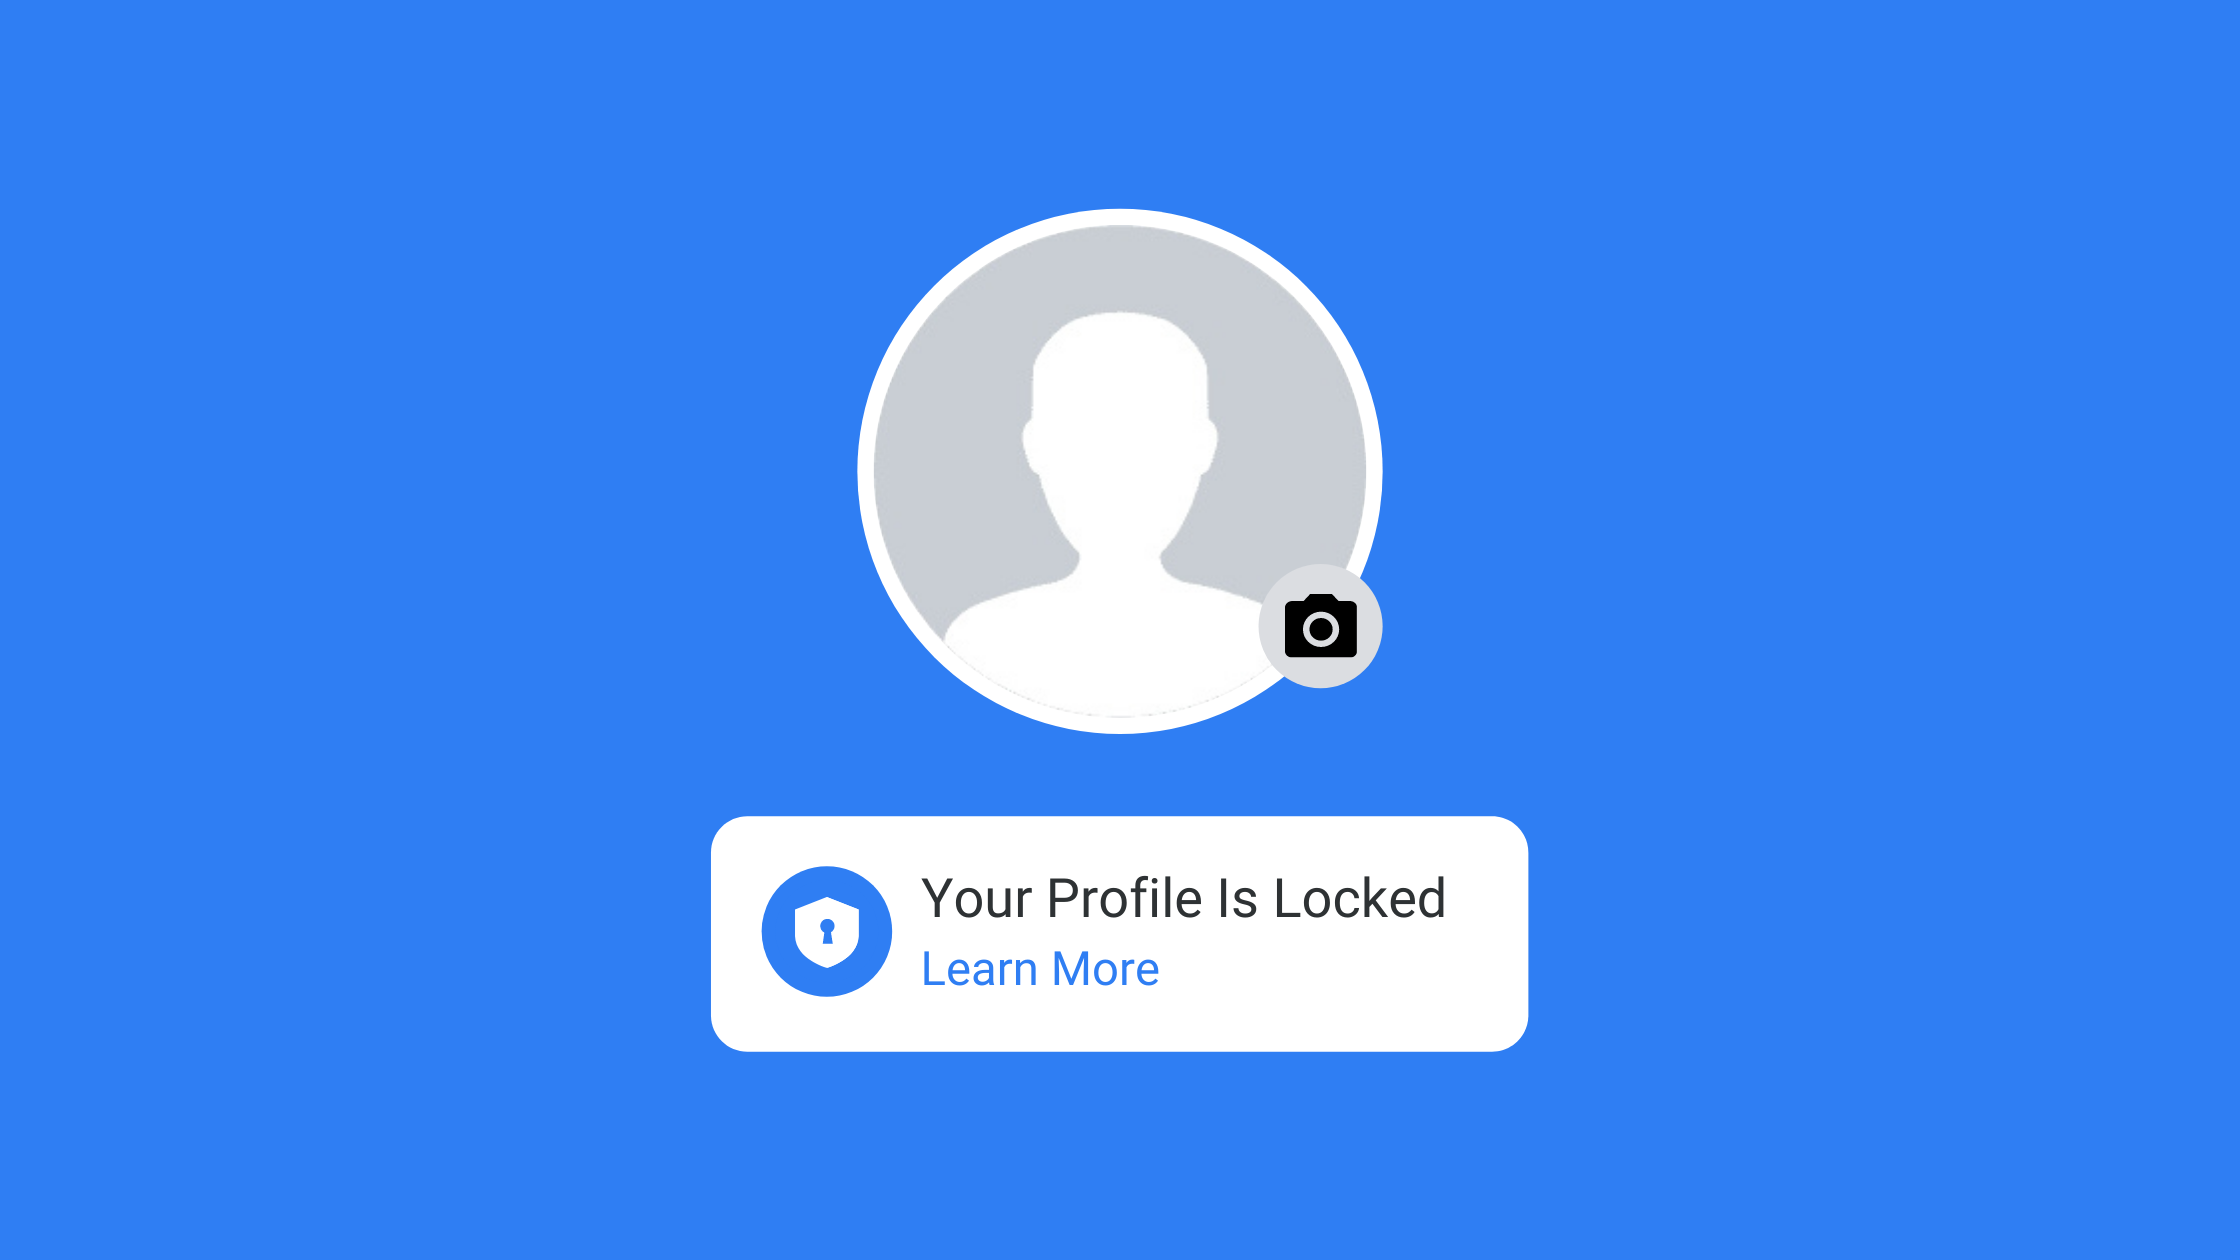 How To Lock Facebook Profile